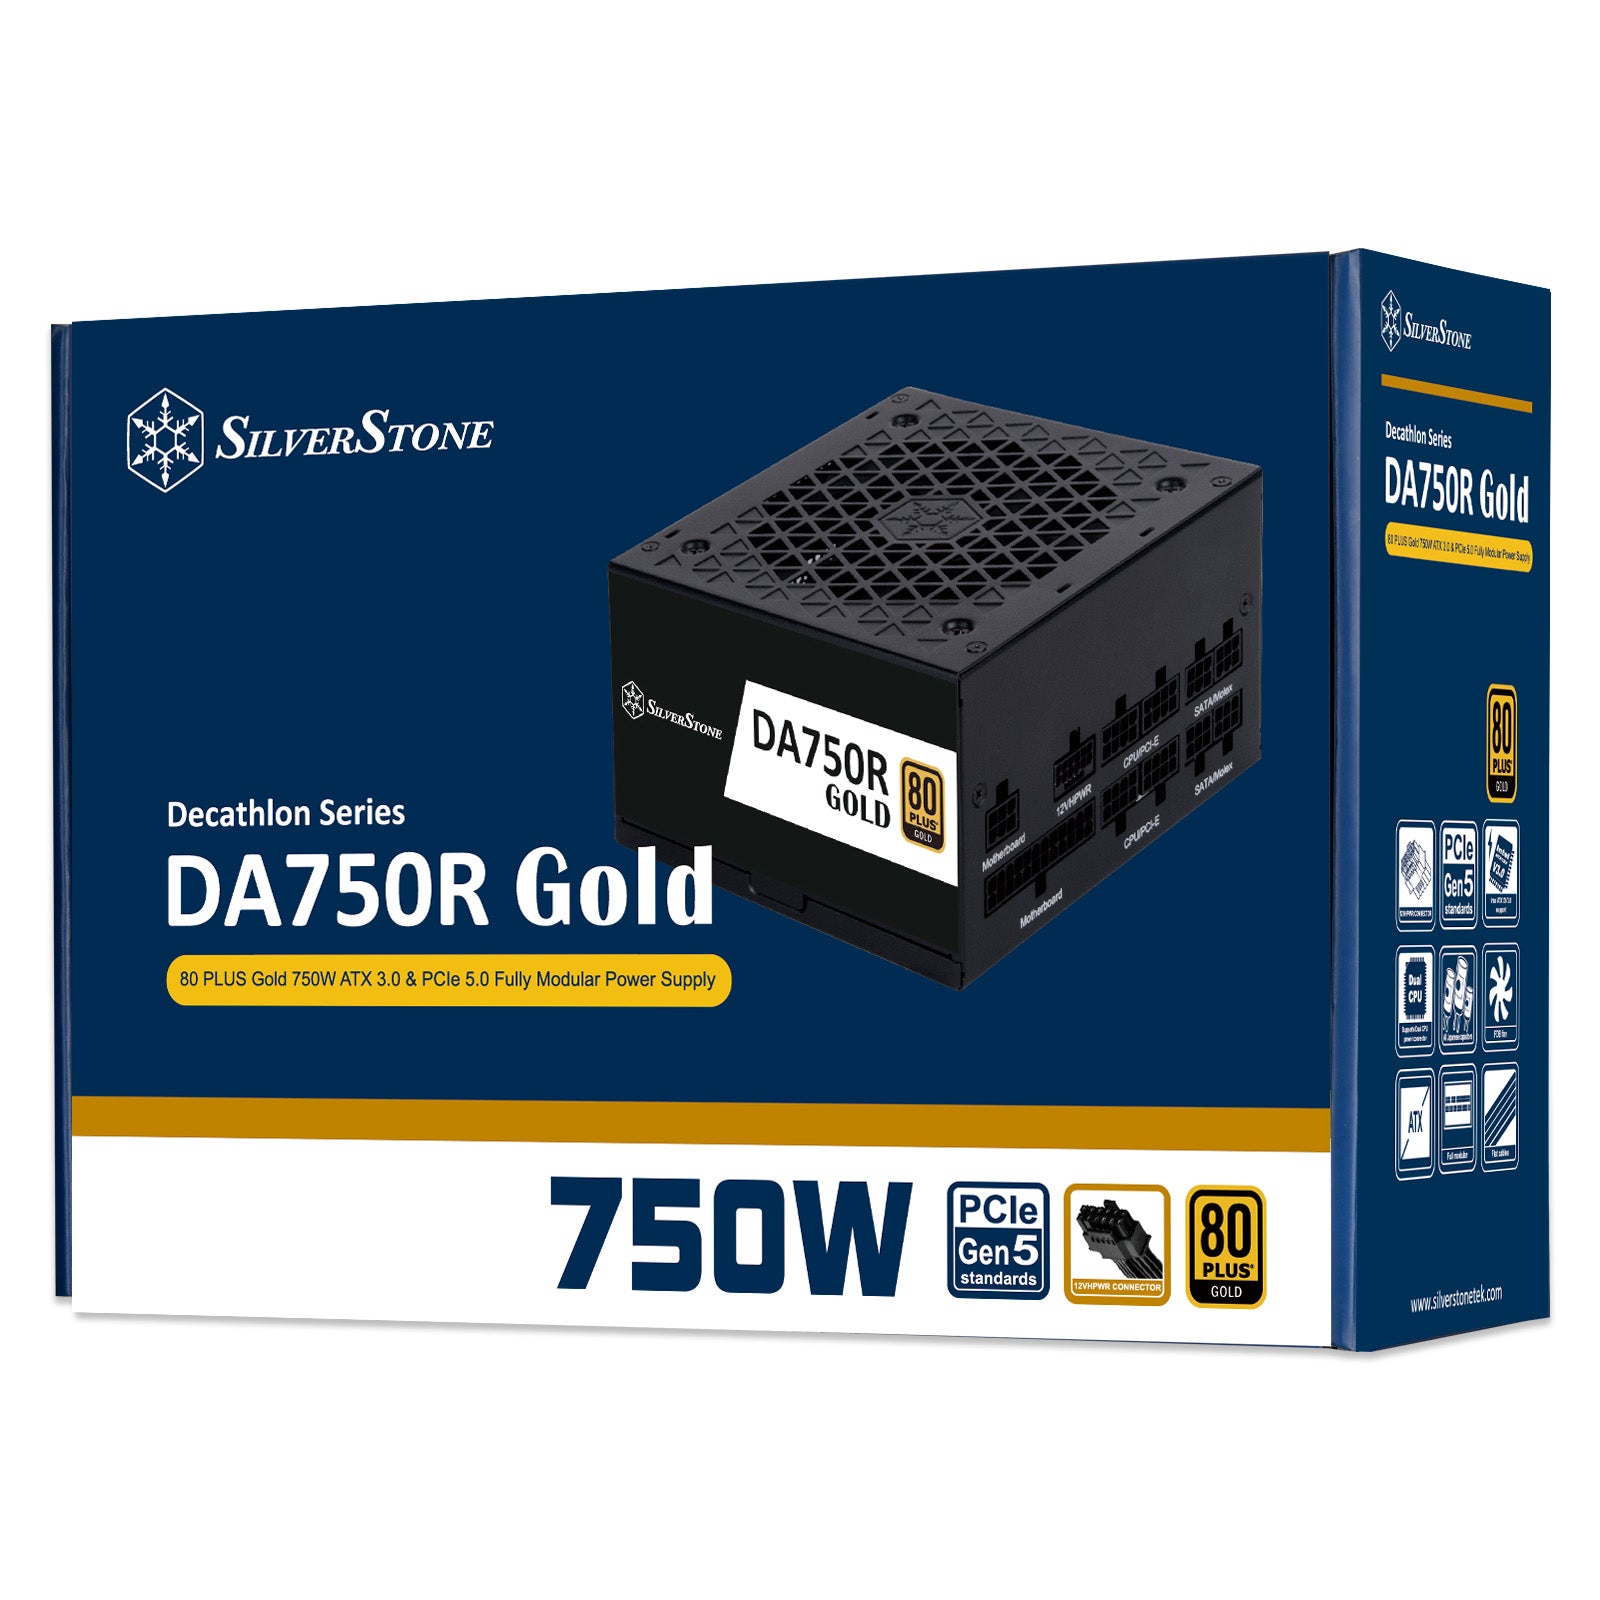 SilverStone DA750R Gold 80 PLUS Gold 750W ATX 3.0 & PCIe 5.0 Fully Modular Power Supply